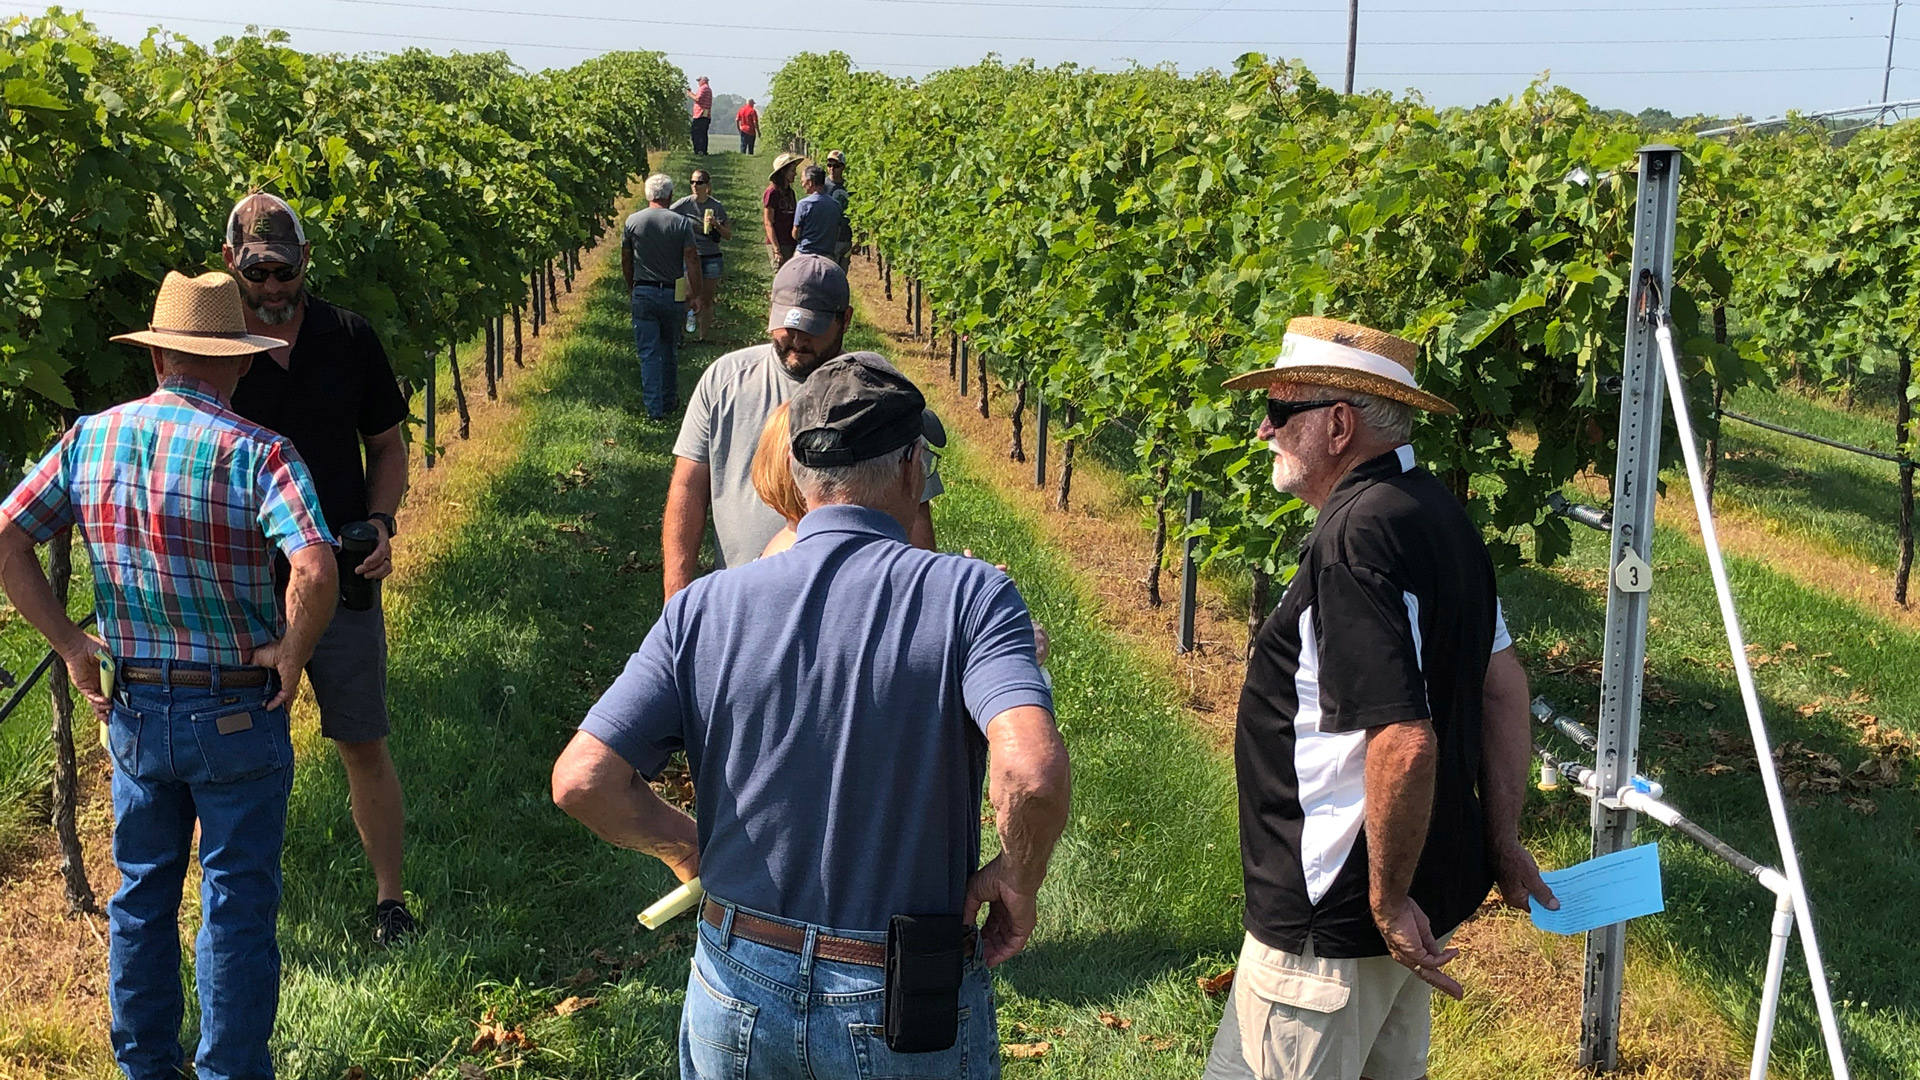 The University of Nebraska Viticulture Program and the Nebraska Winery and Grape Growers Association will host the Harvest Field Day August 8 at Oak Creek Vineyards near Raymond, Nebraska.